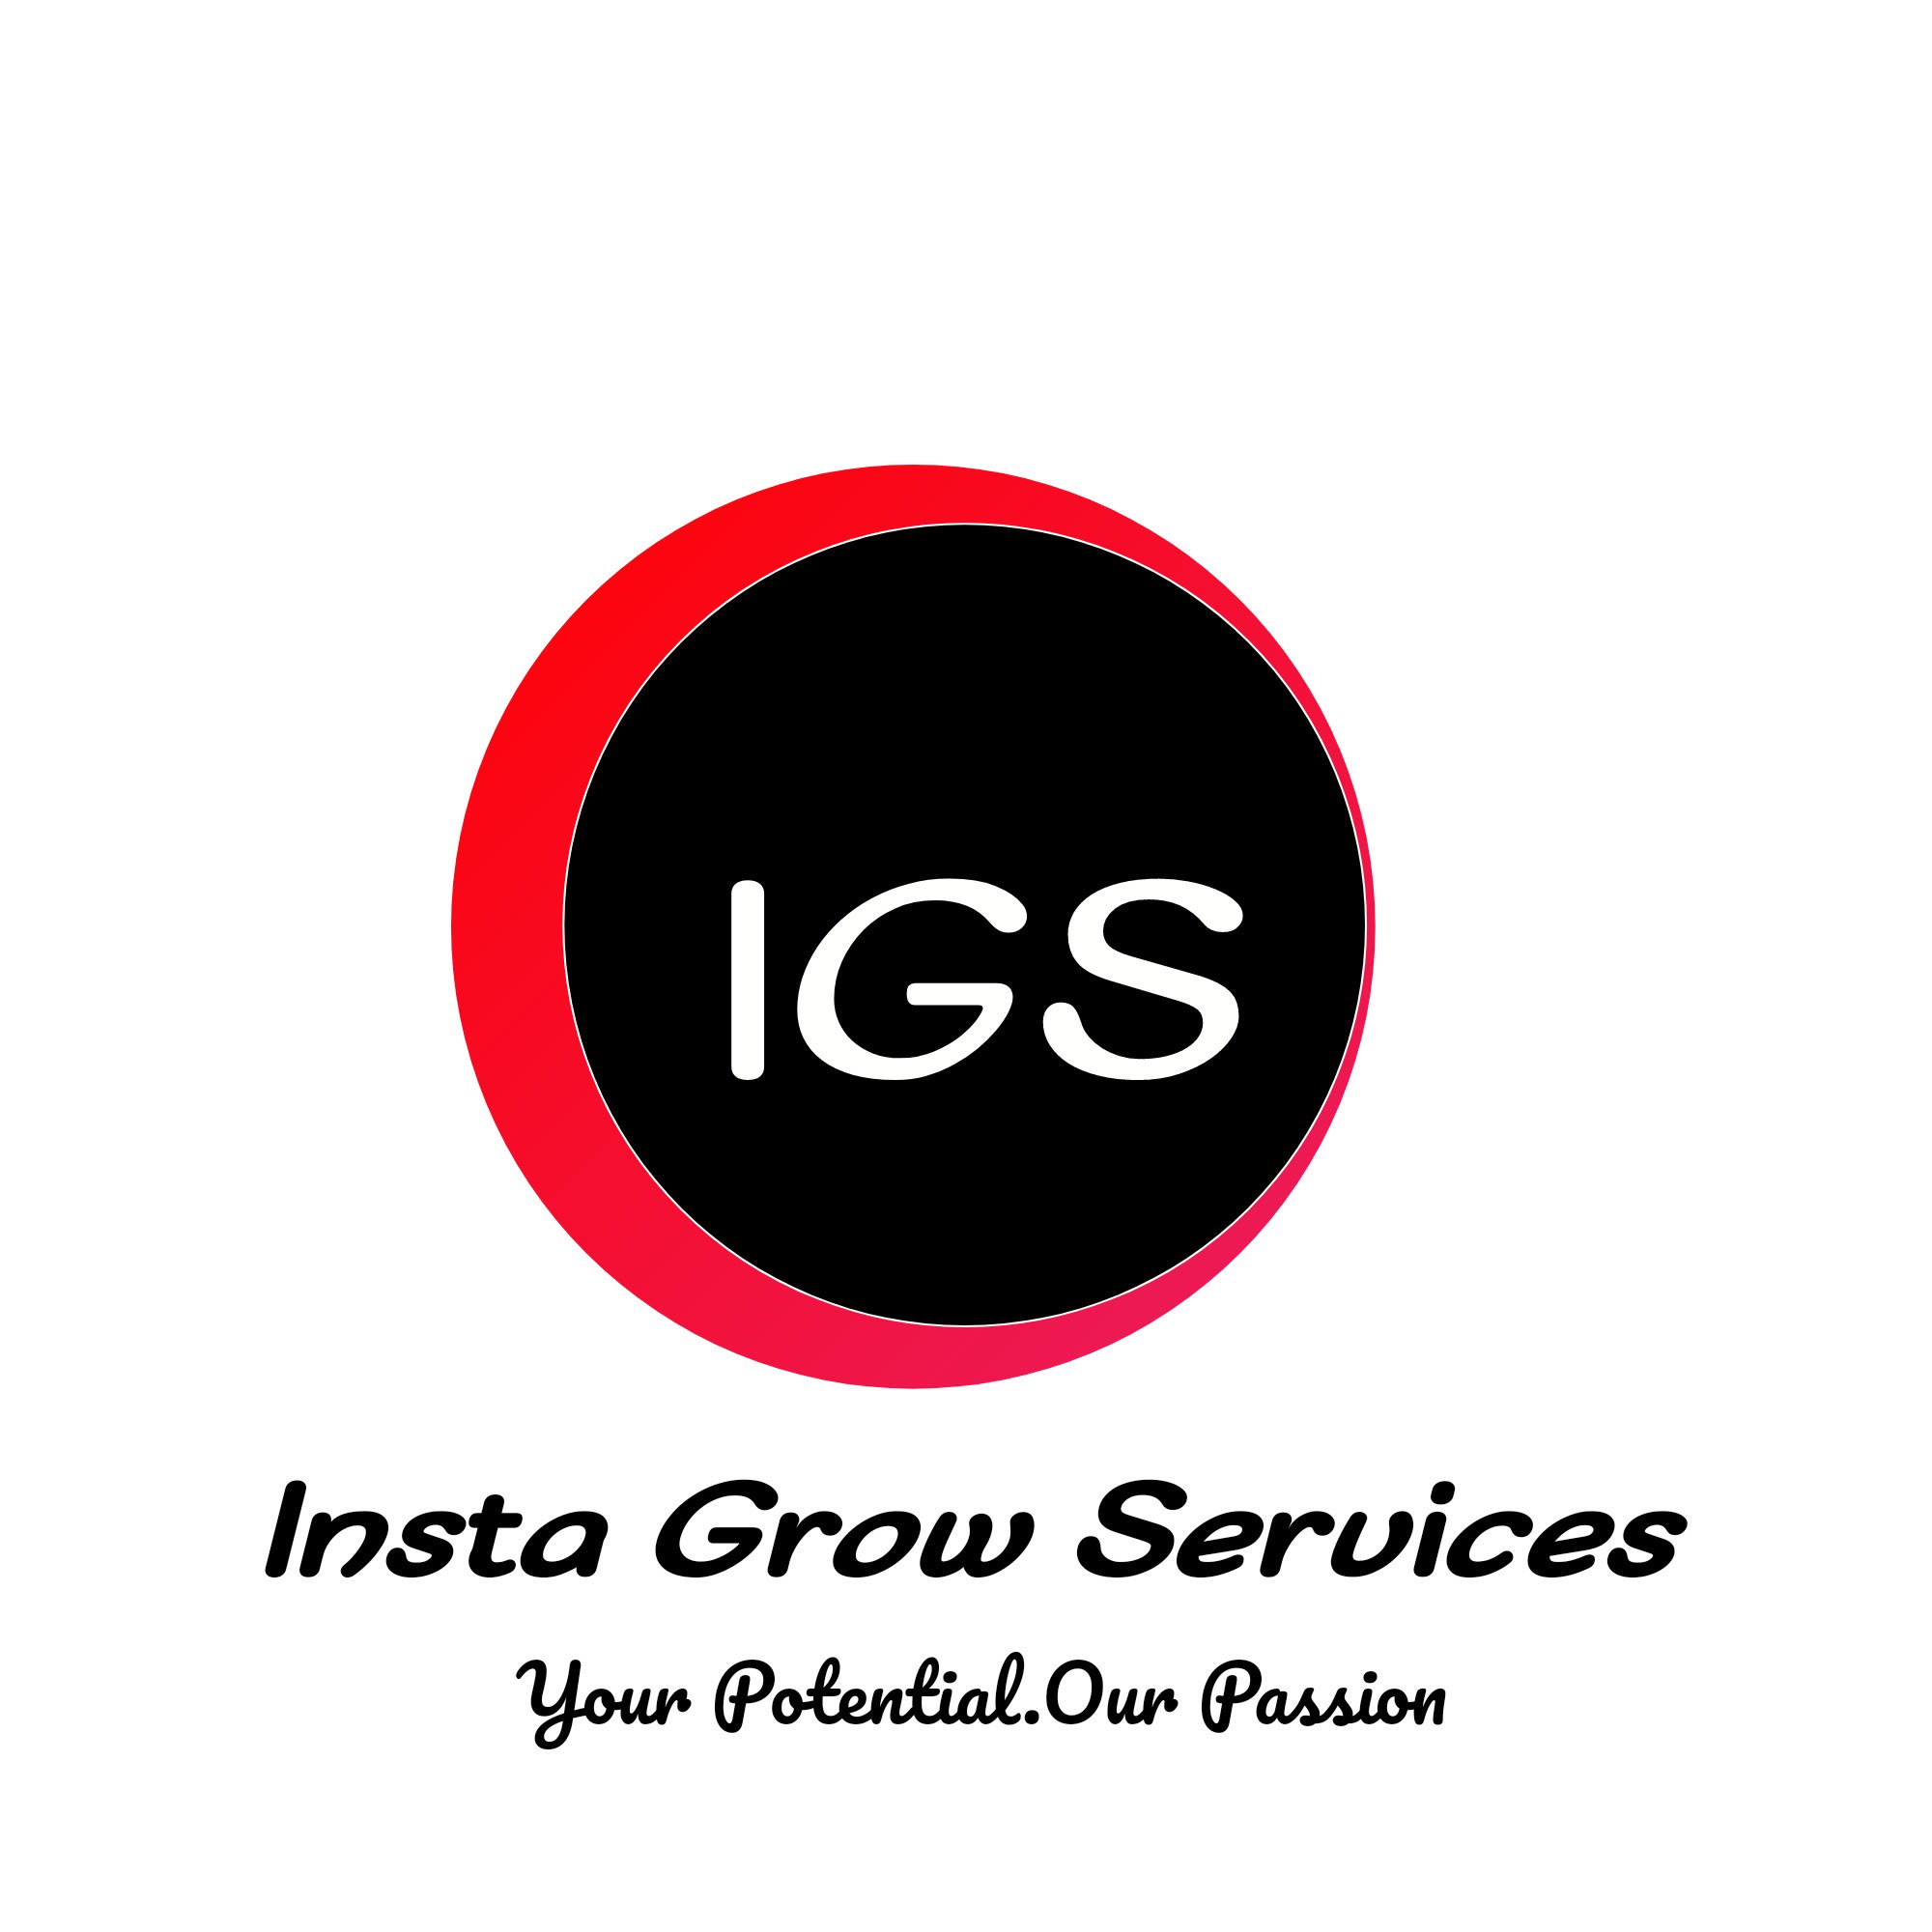 Instagrow Services